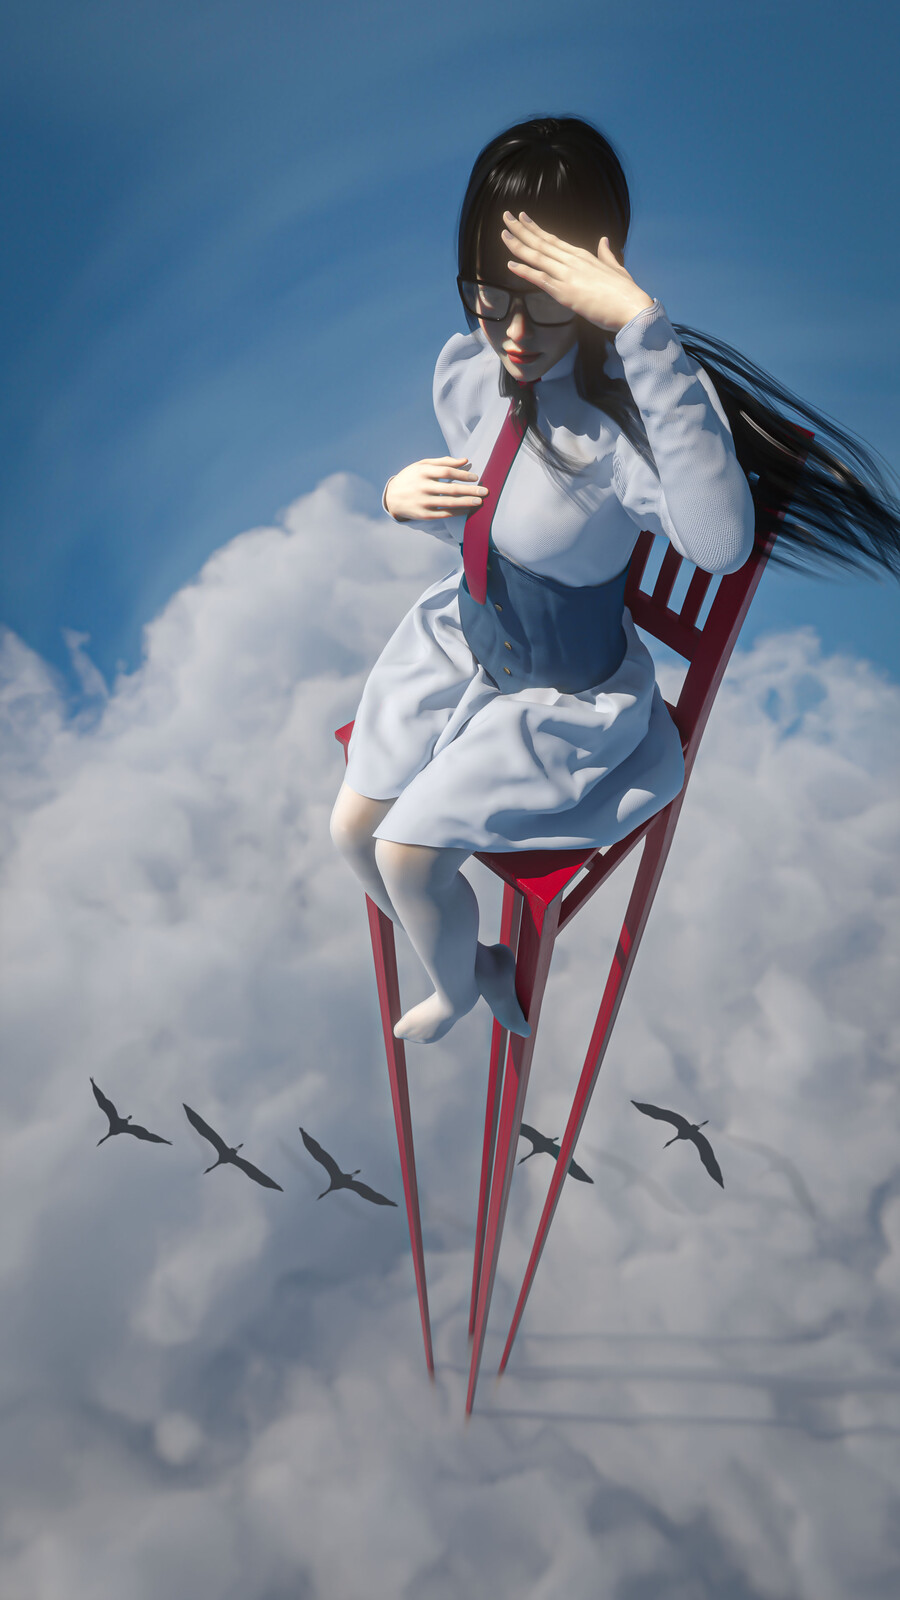 WHIMSICAL I – Girl on the high chair